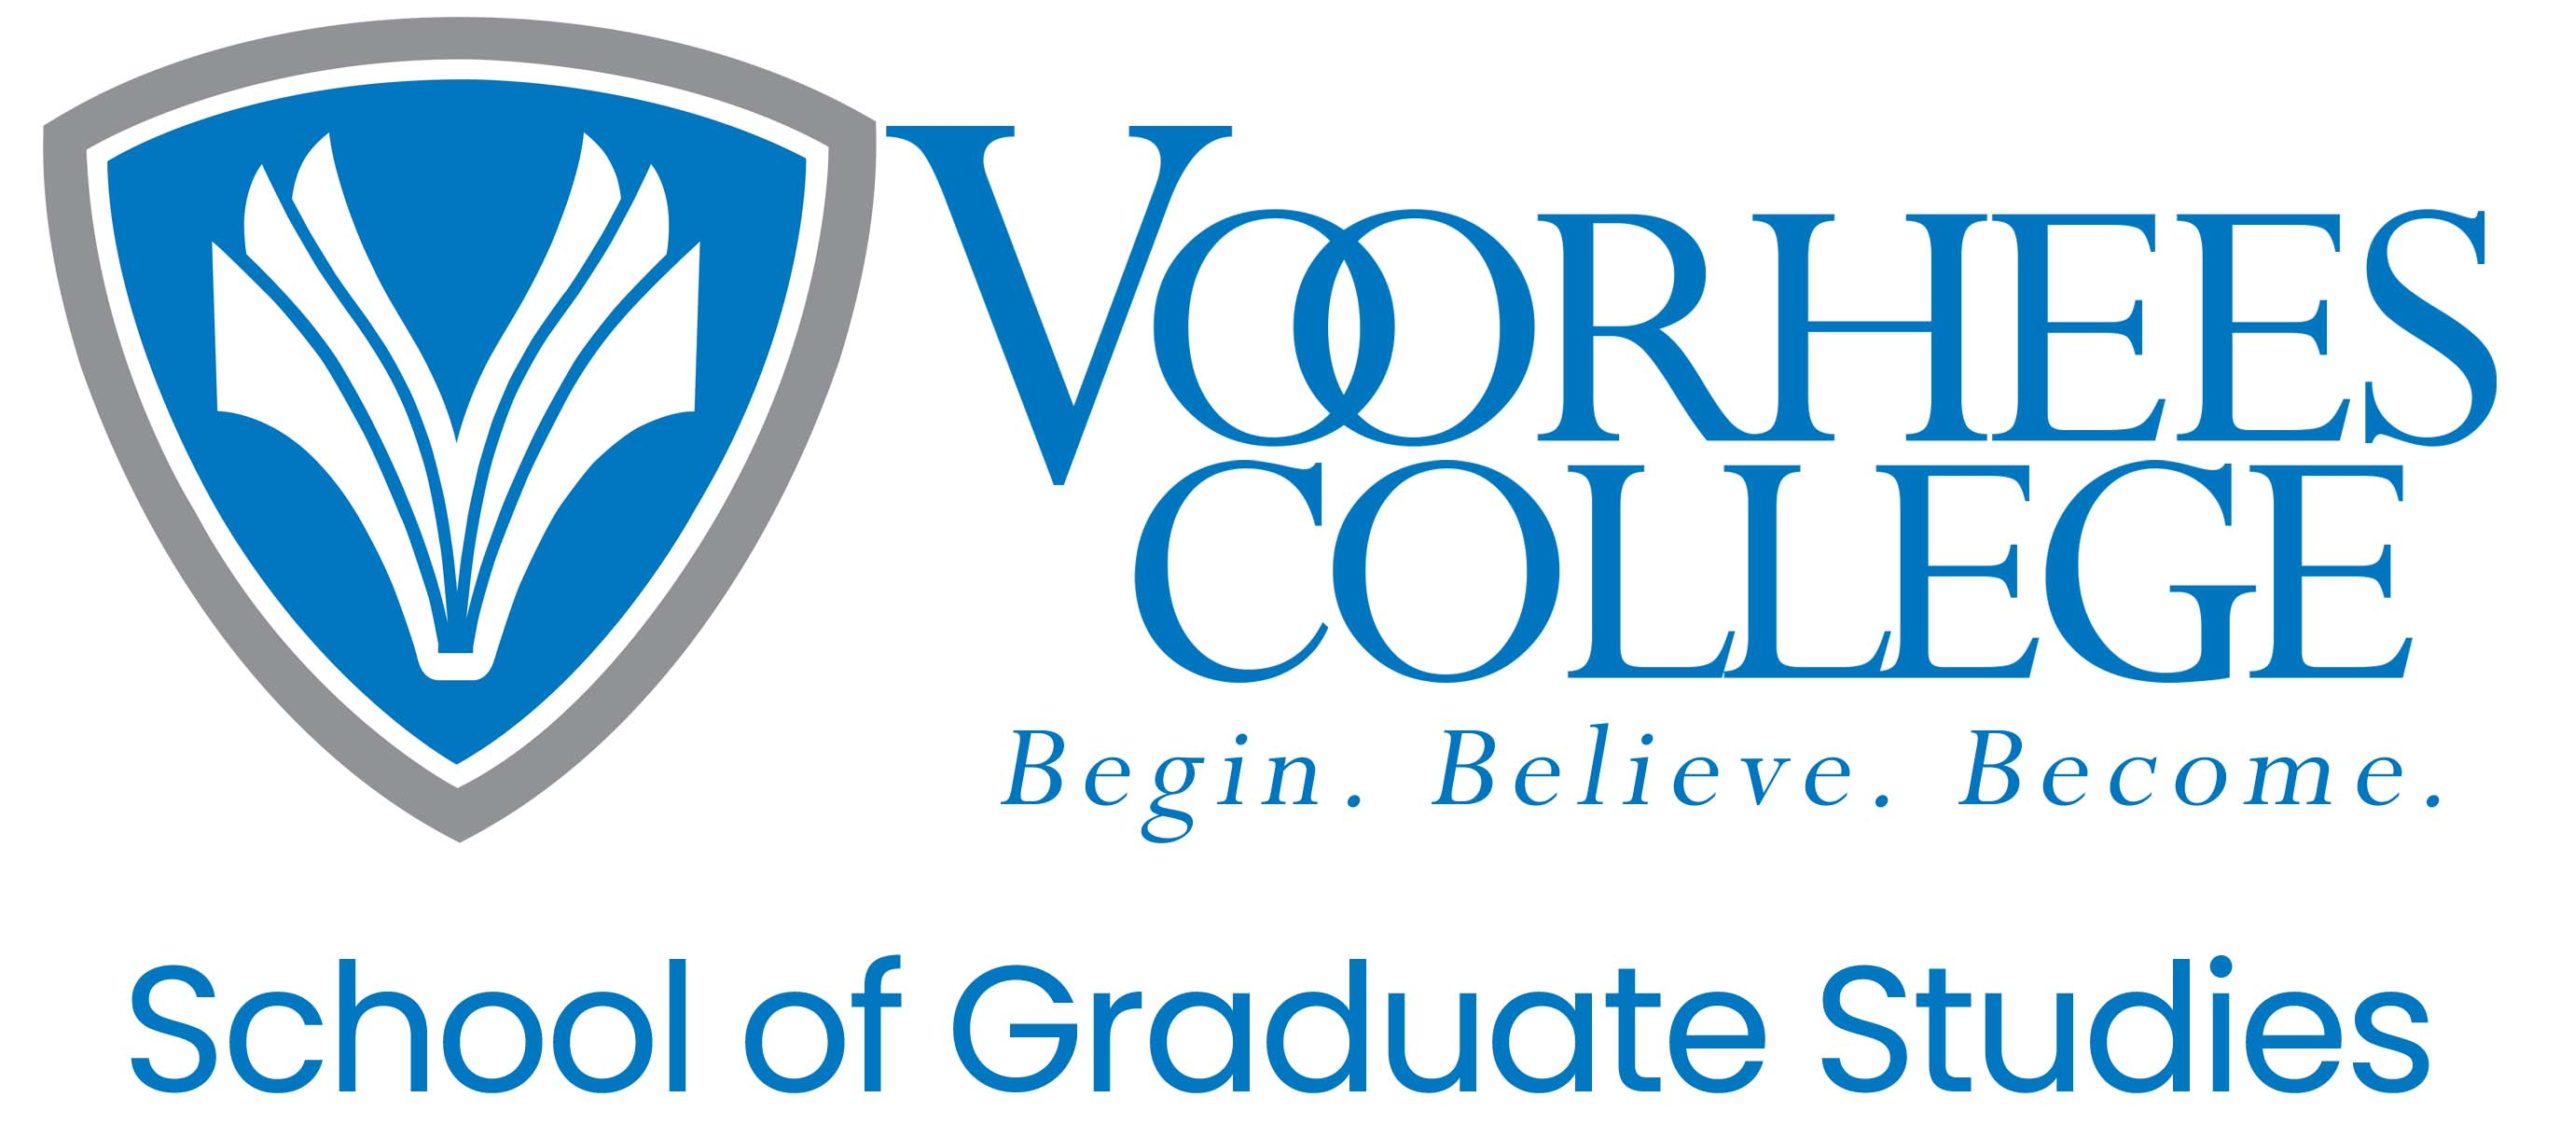 School of Graduate Studies | Voorhees College